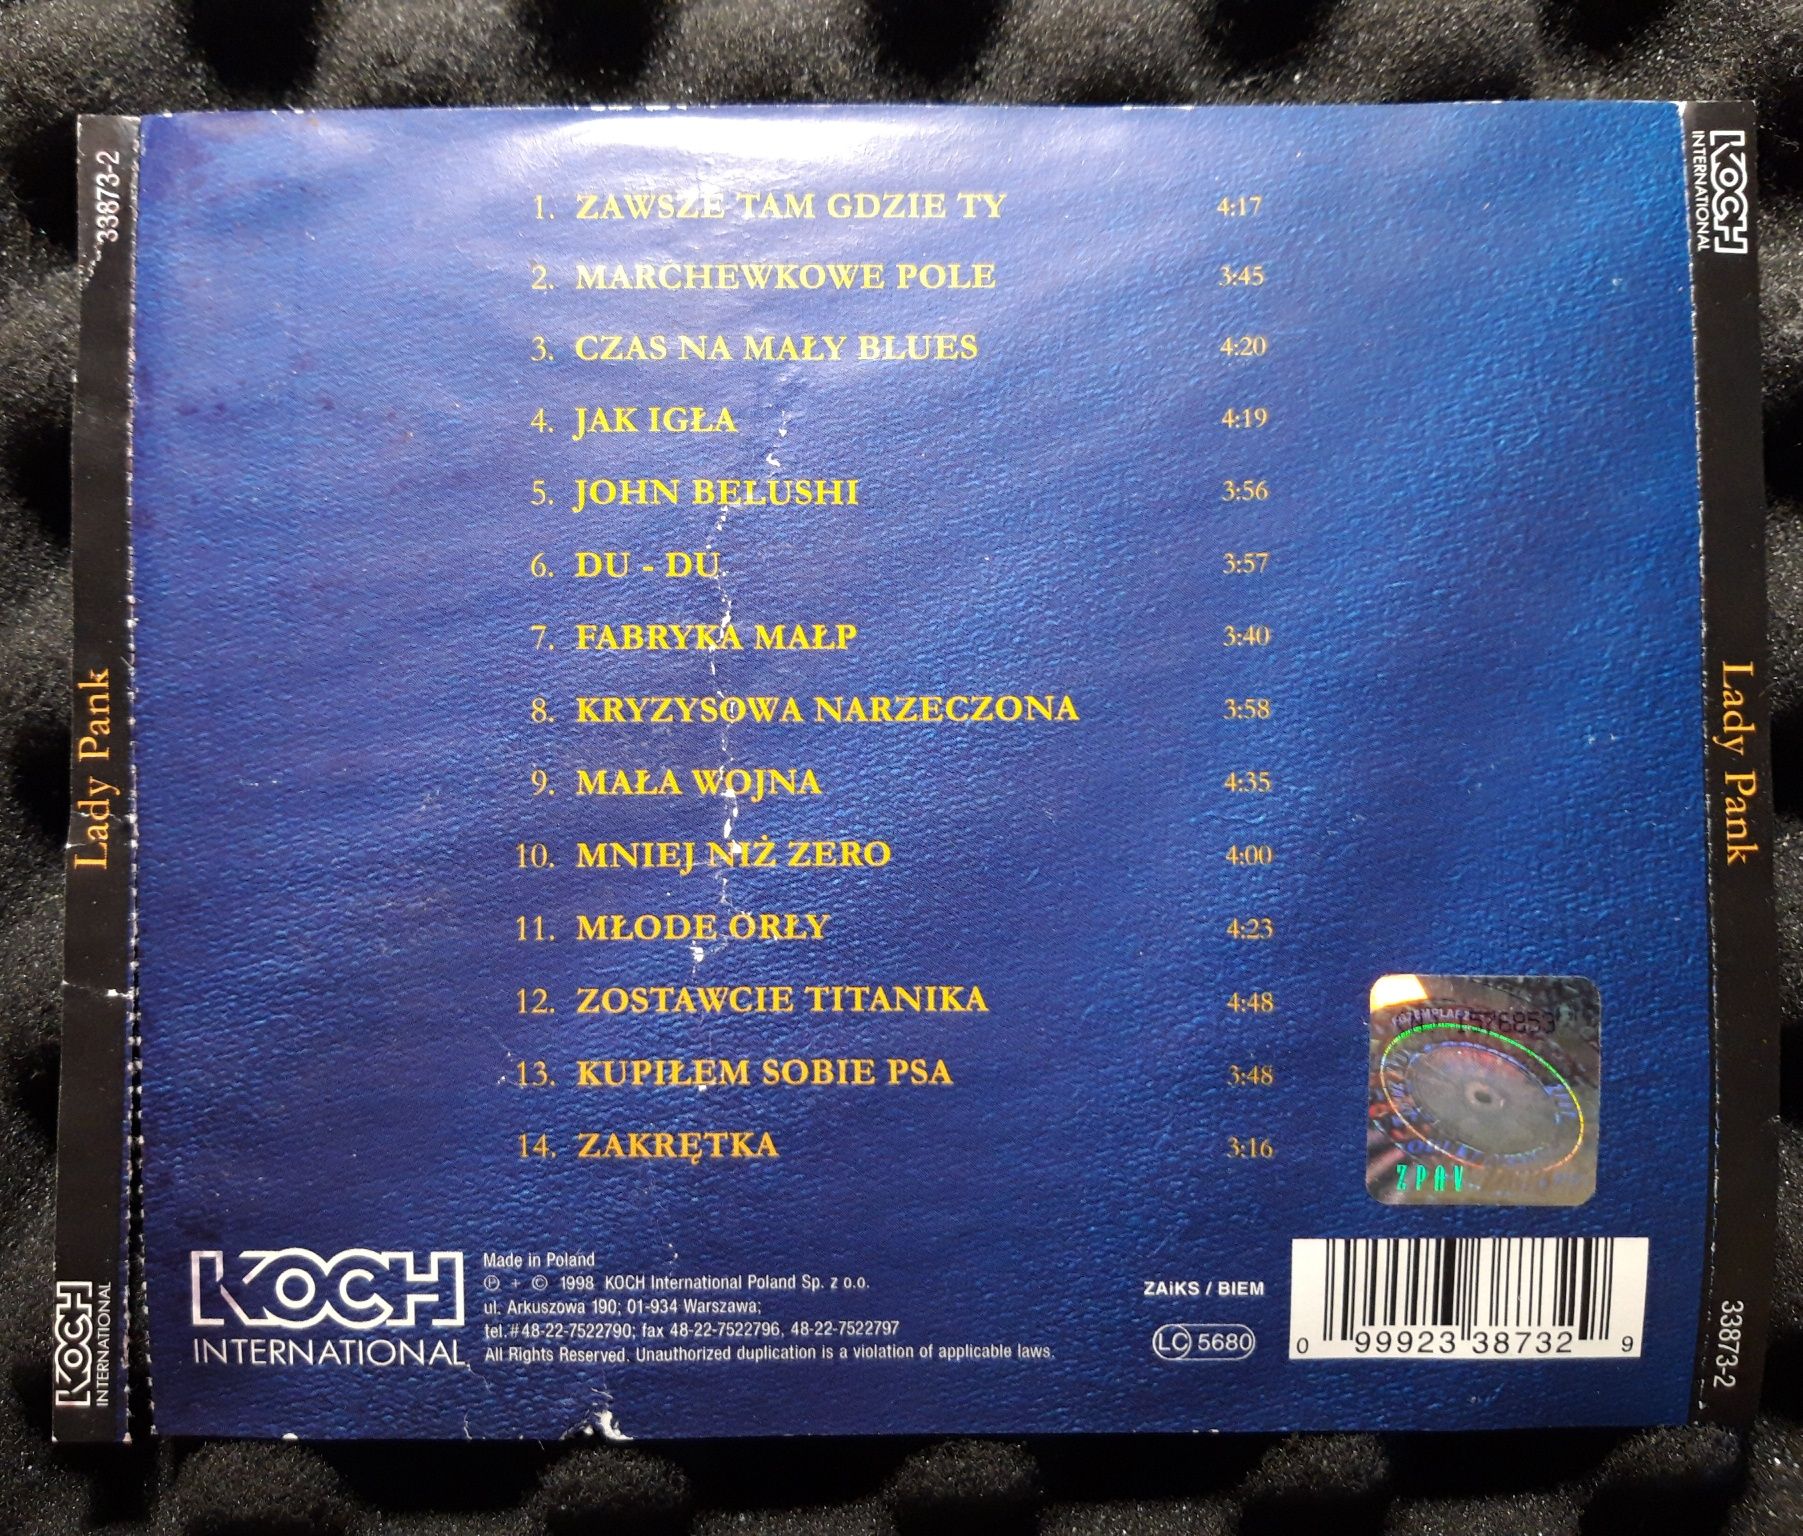 Lady Pank – Gold (CD, 1998)